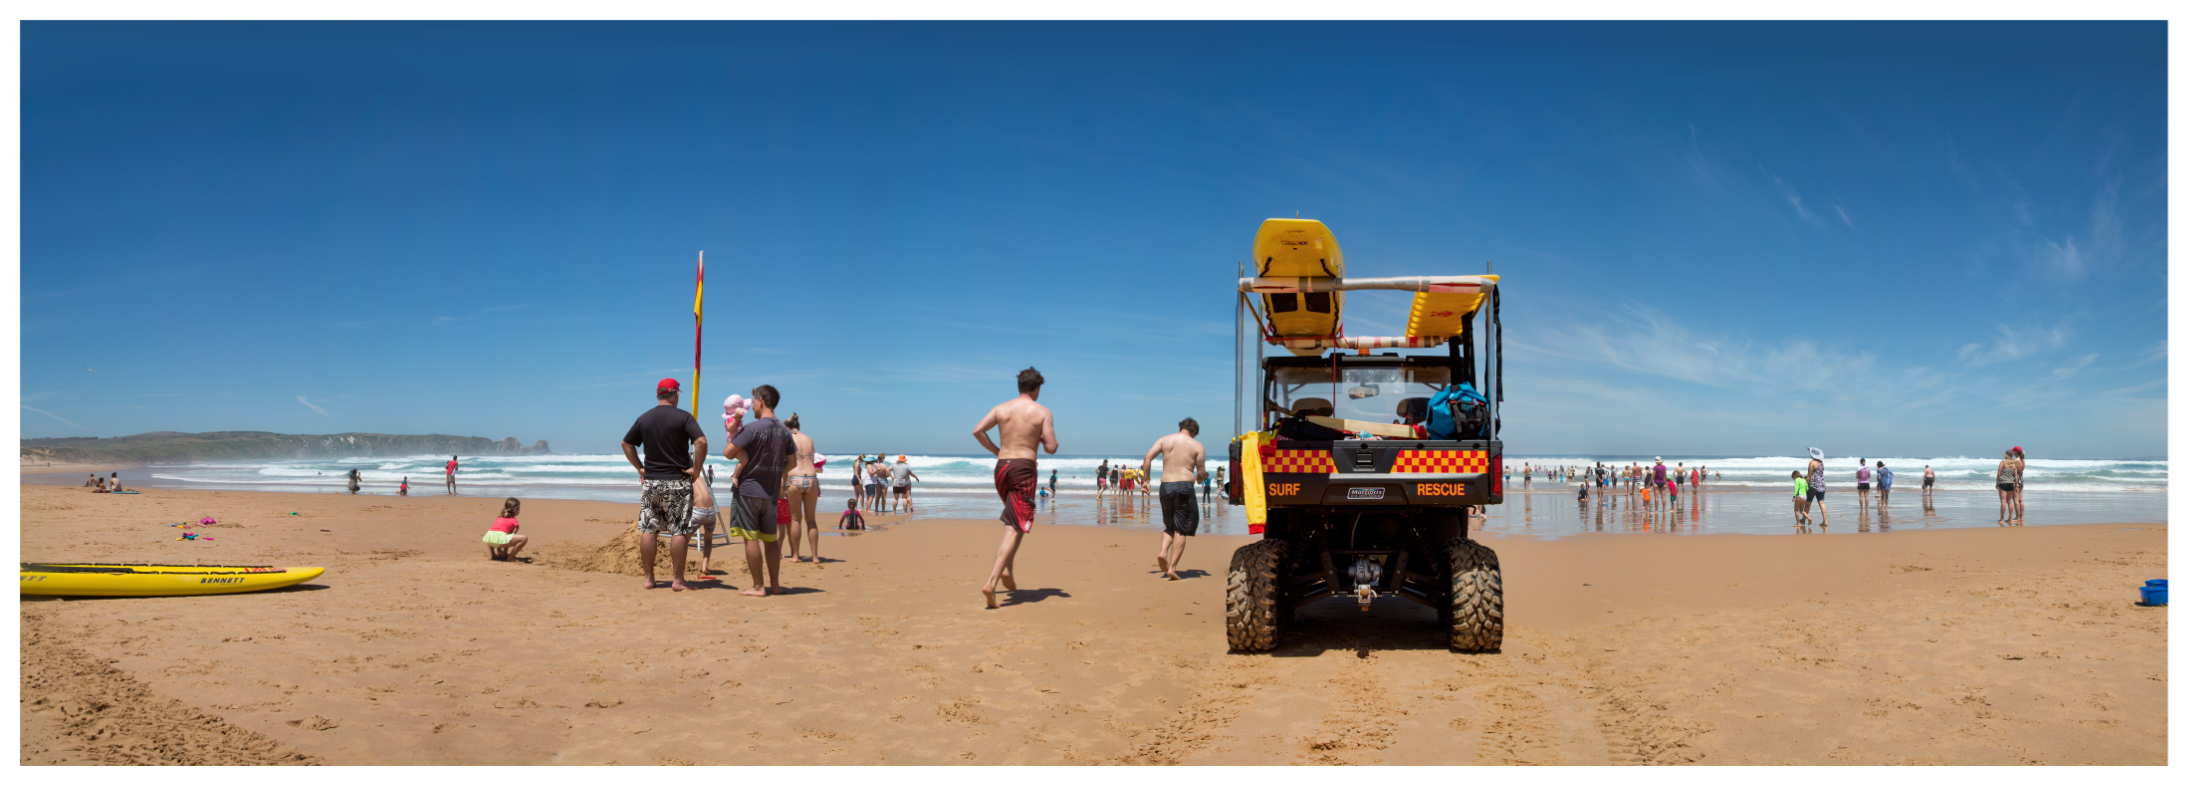 Surf Rescue with runners - Woolamai Beach, Phillip Island, Victoria